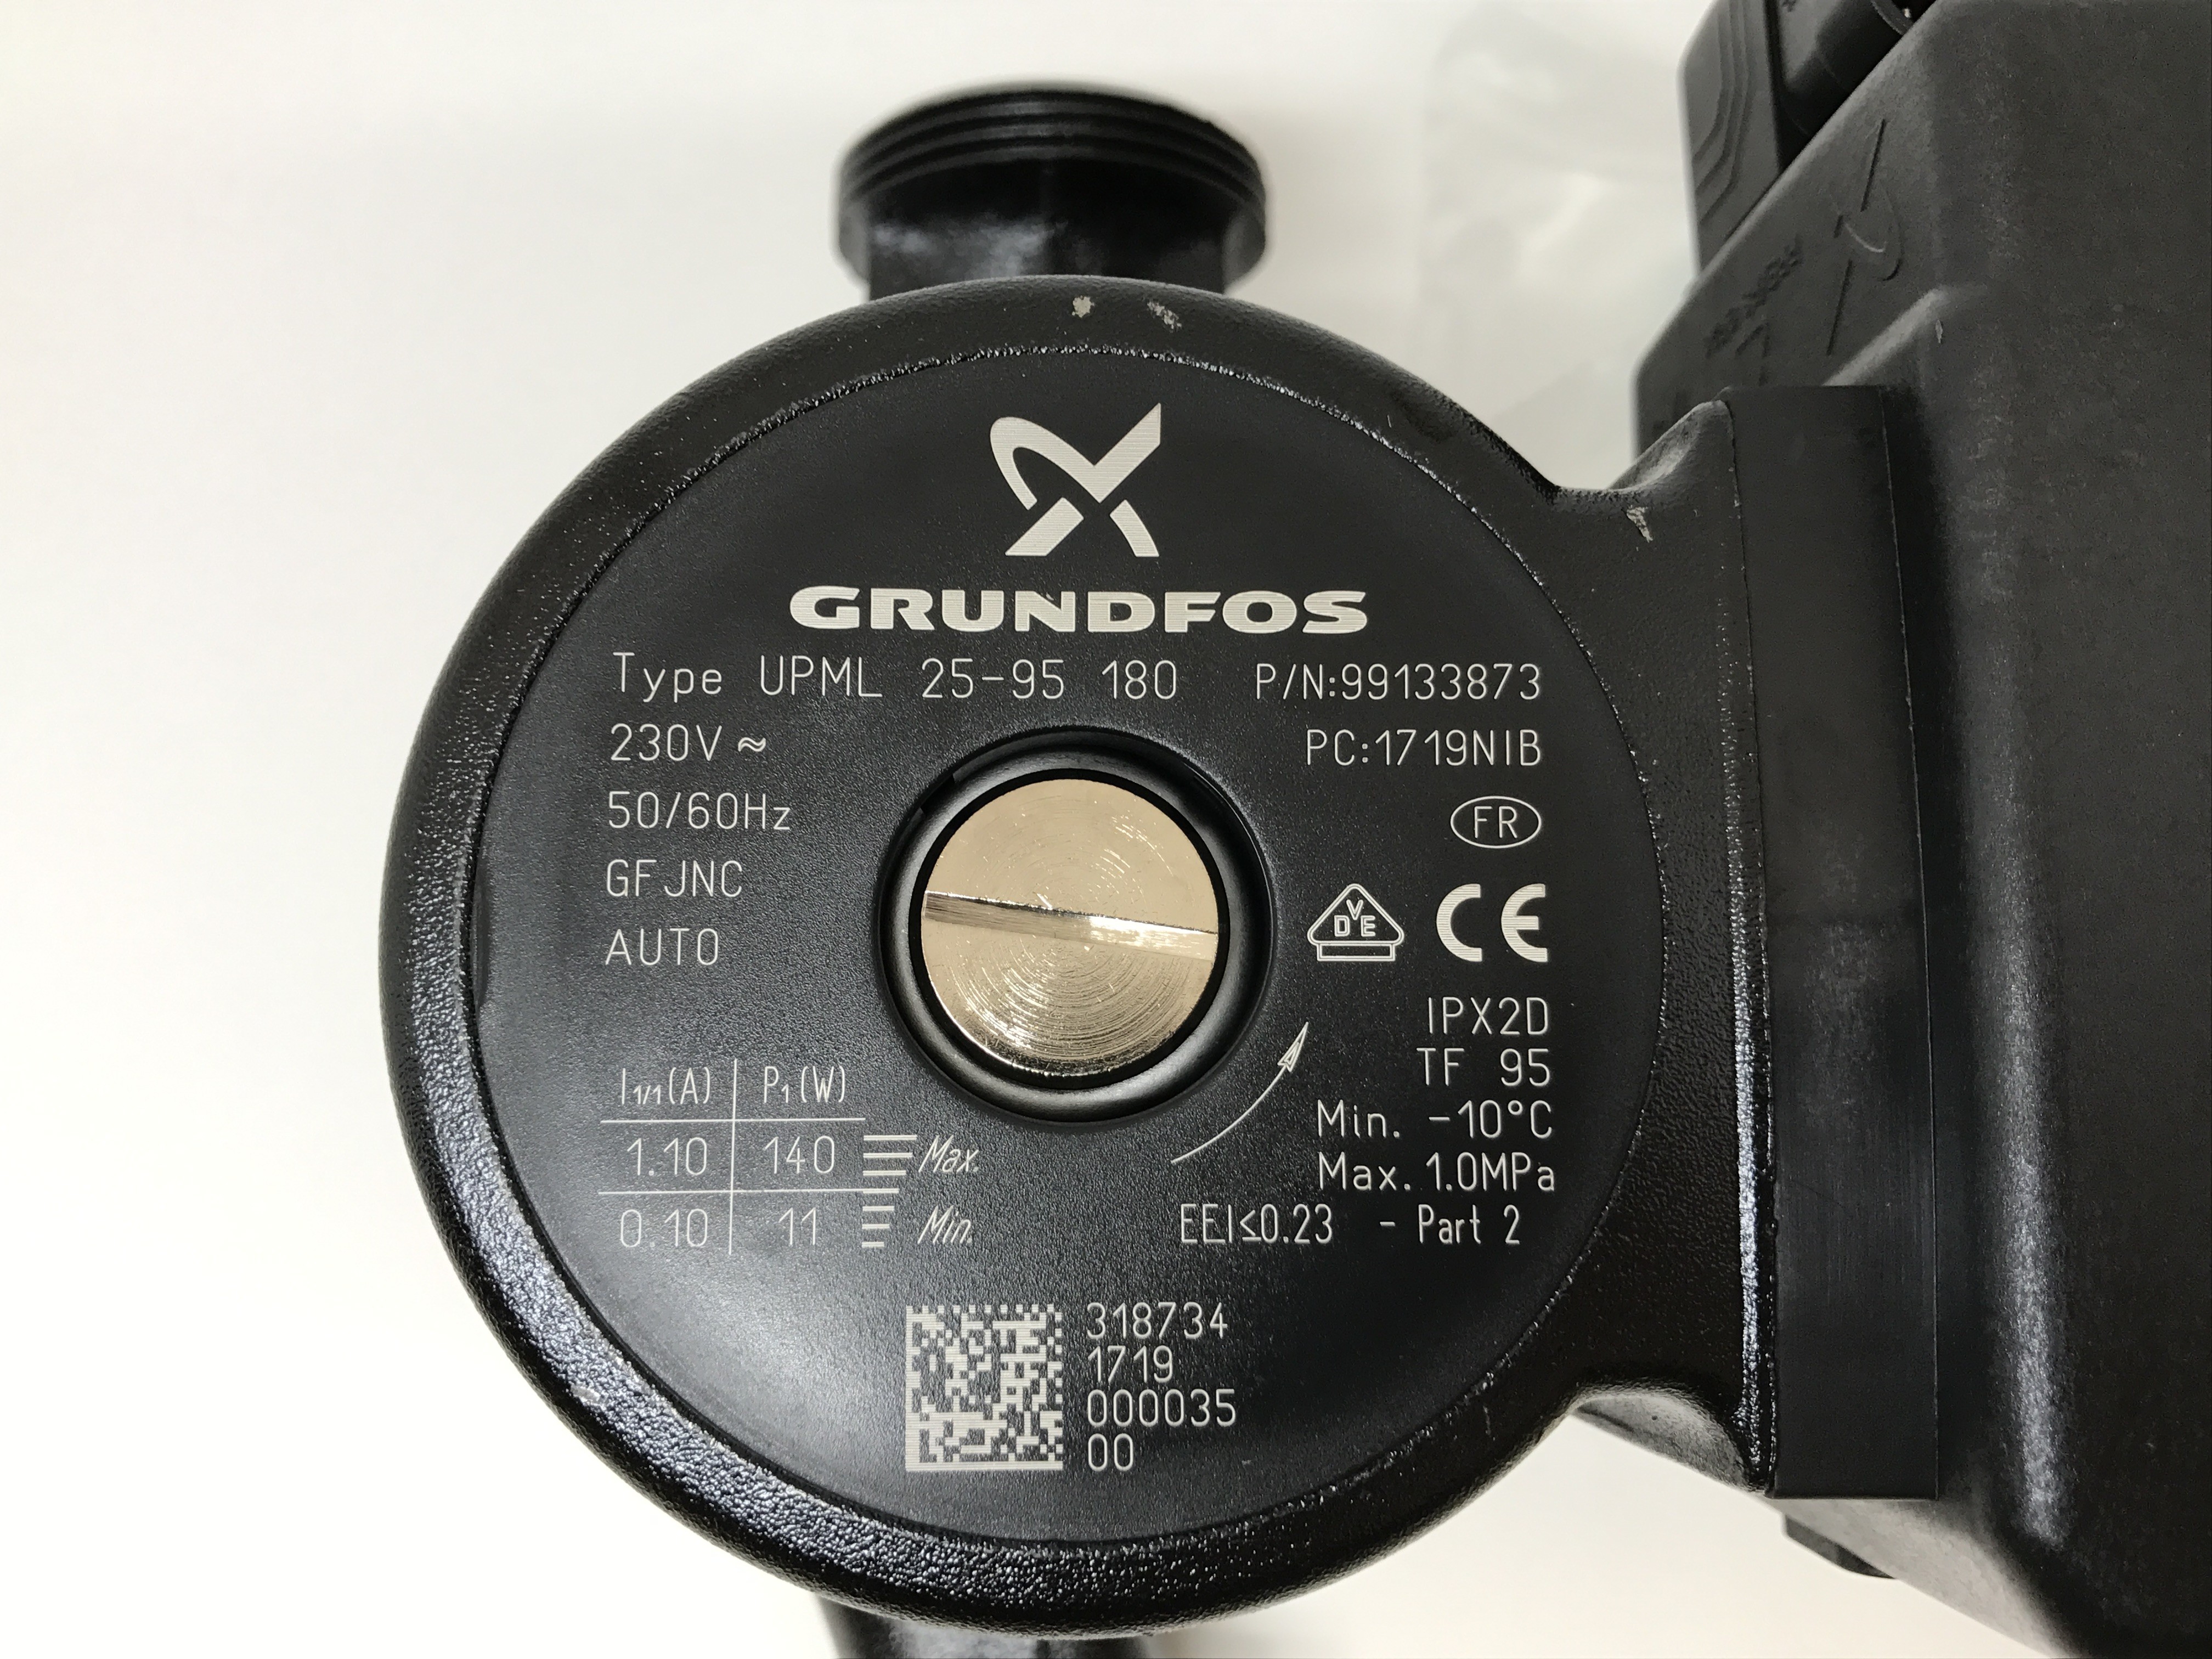 Grundfos ups 25 80. Grundfos ups 25-80 180. Grundfos ups 25-80 график. Ups 25-80 180mm.